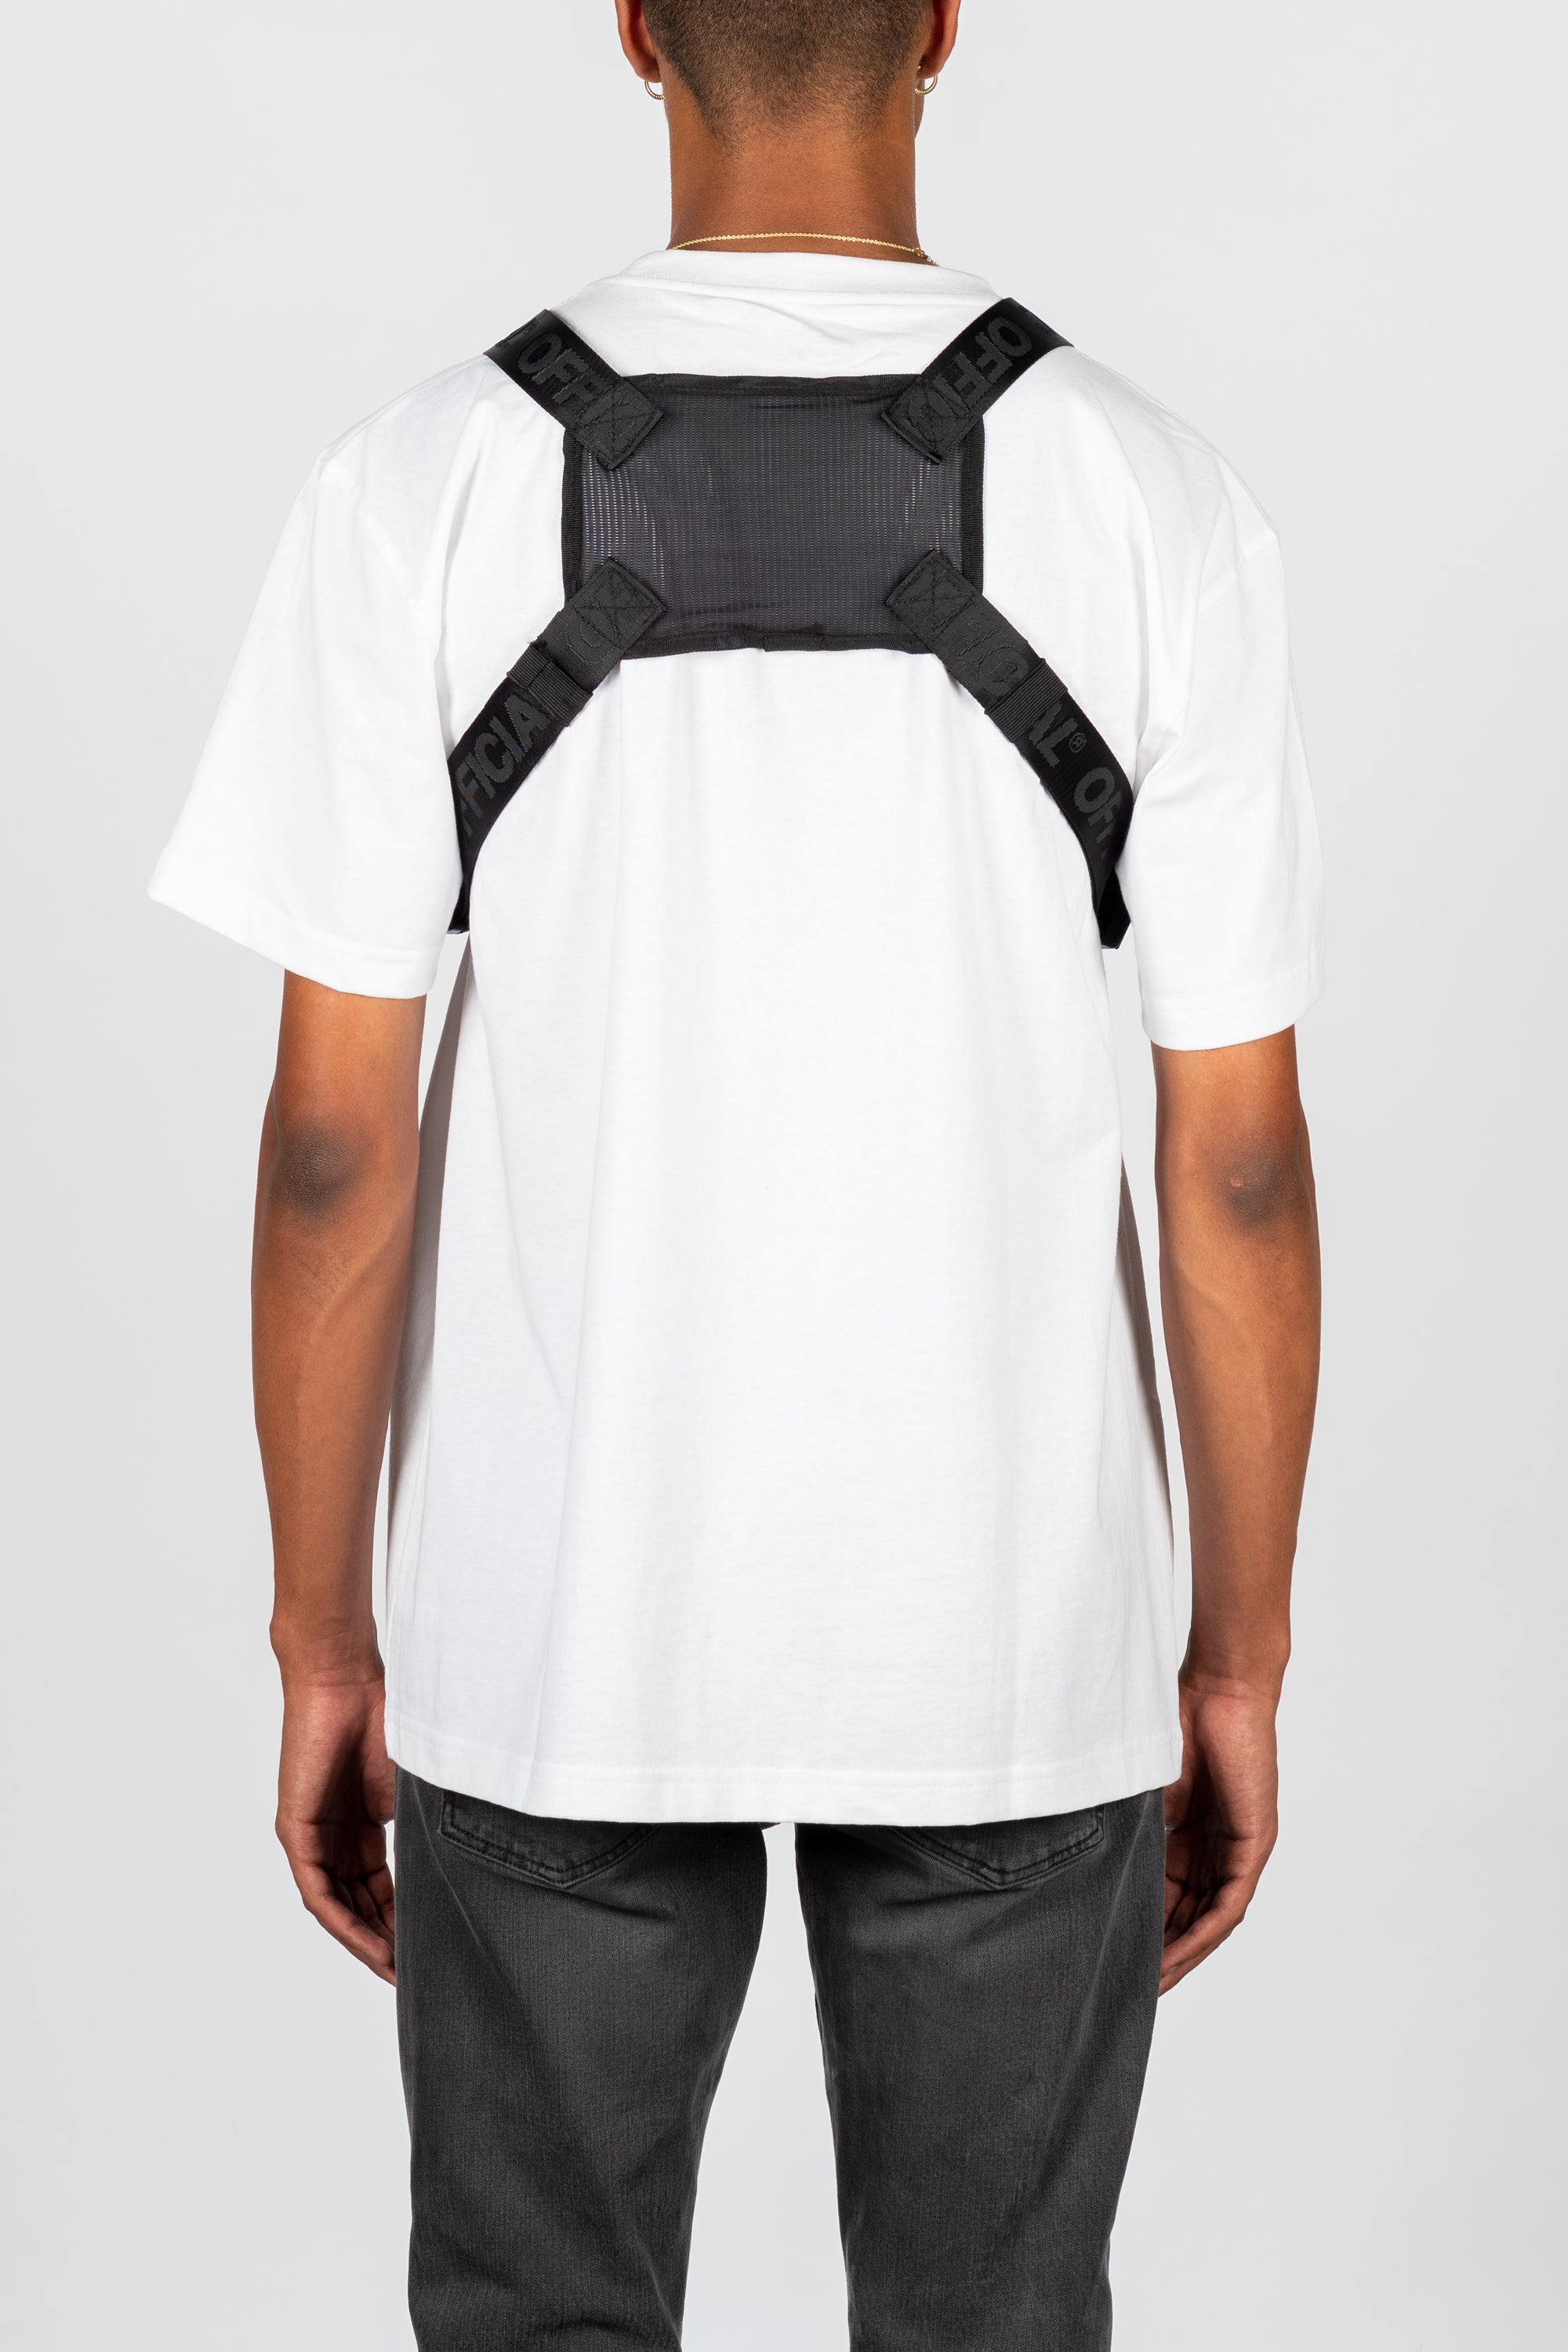 Sling Bag nike sport waist chest bag couple shoulder bag 18155CM Mens  Fashion Bags Sling Bags on Carousell